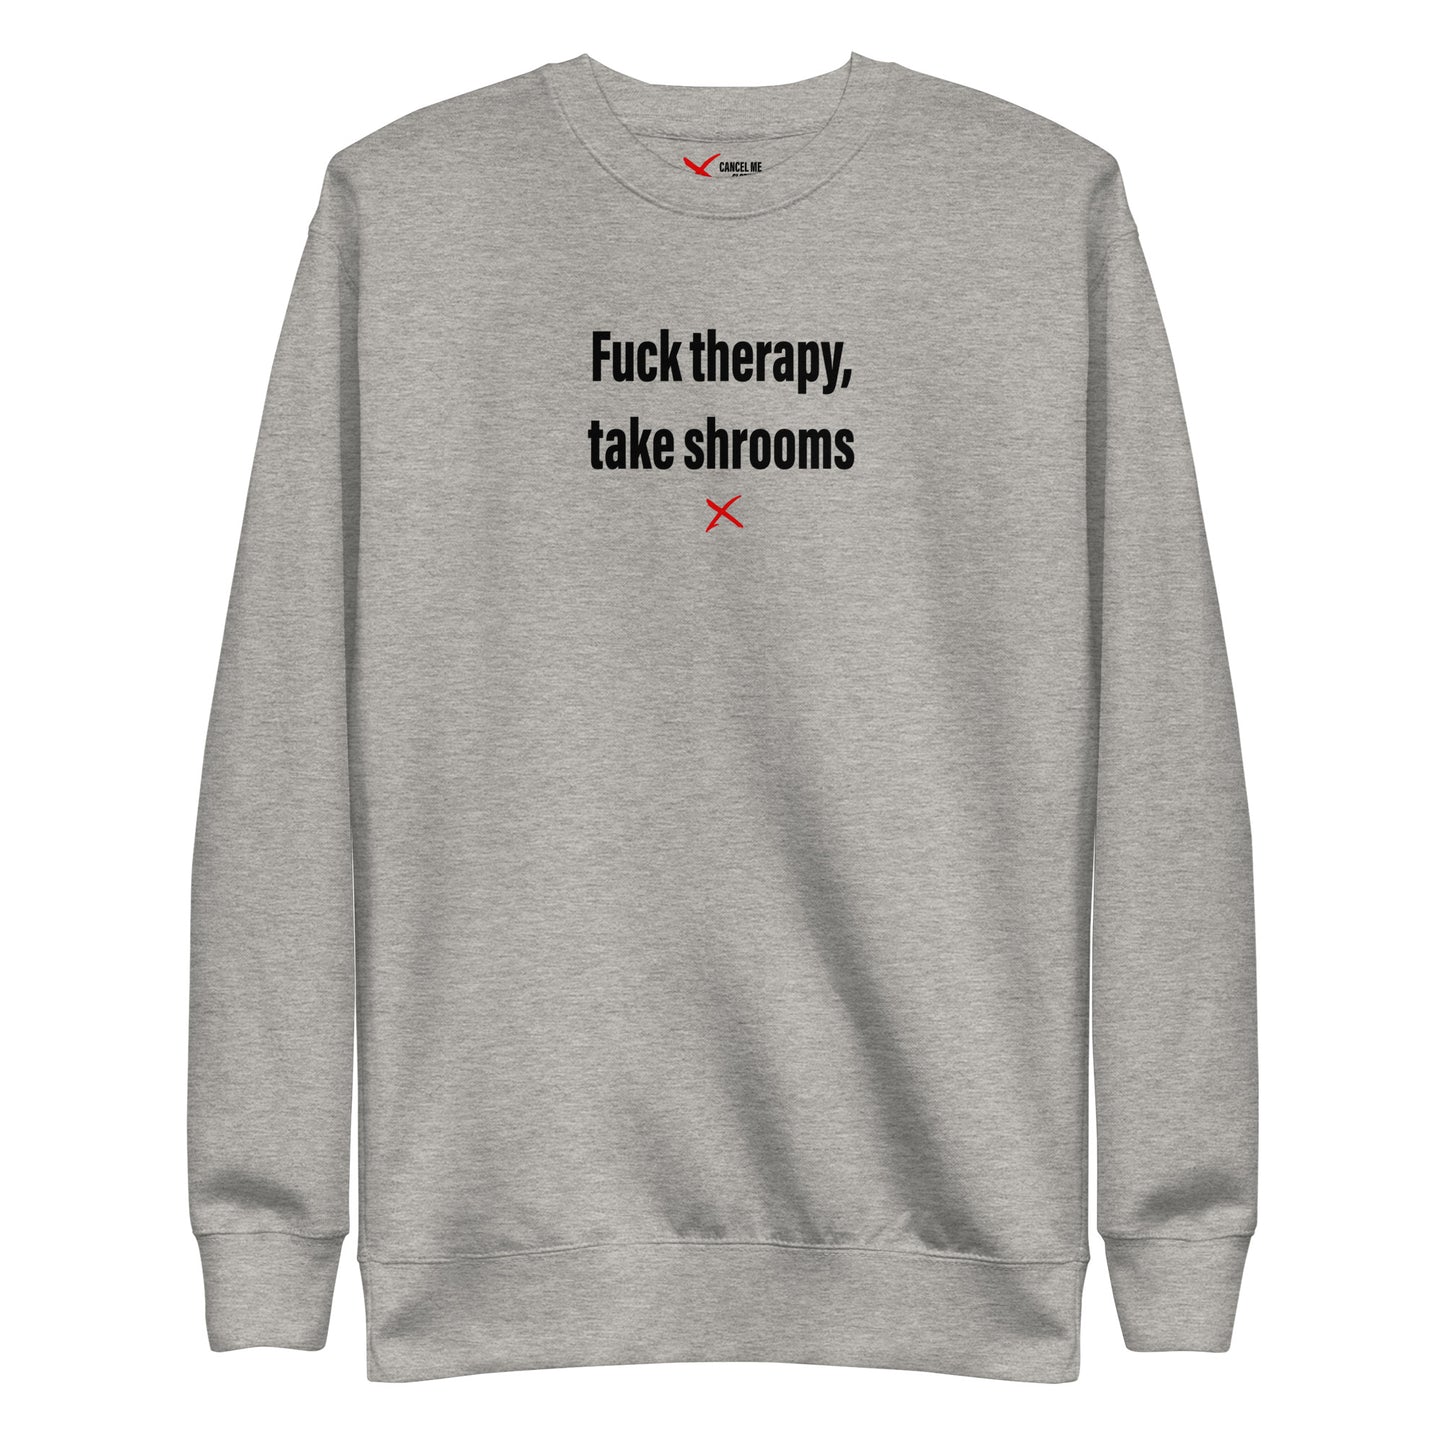 Fuck therapy, take shrooms - Sweatshirt